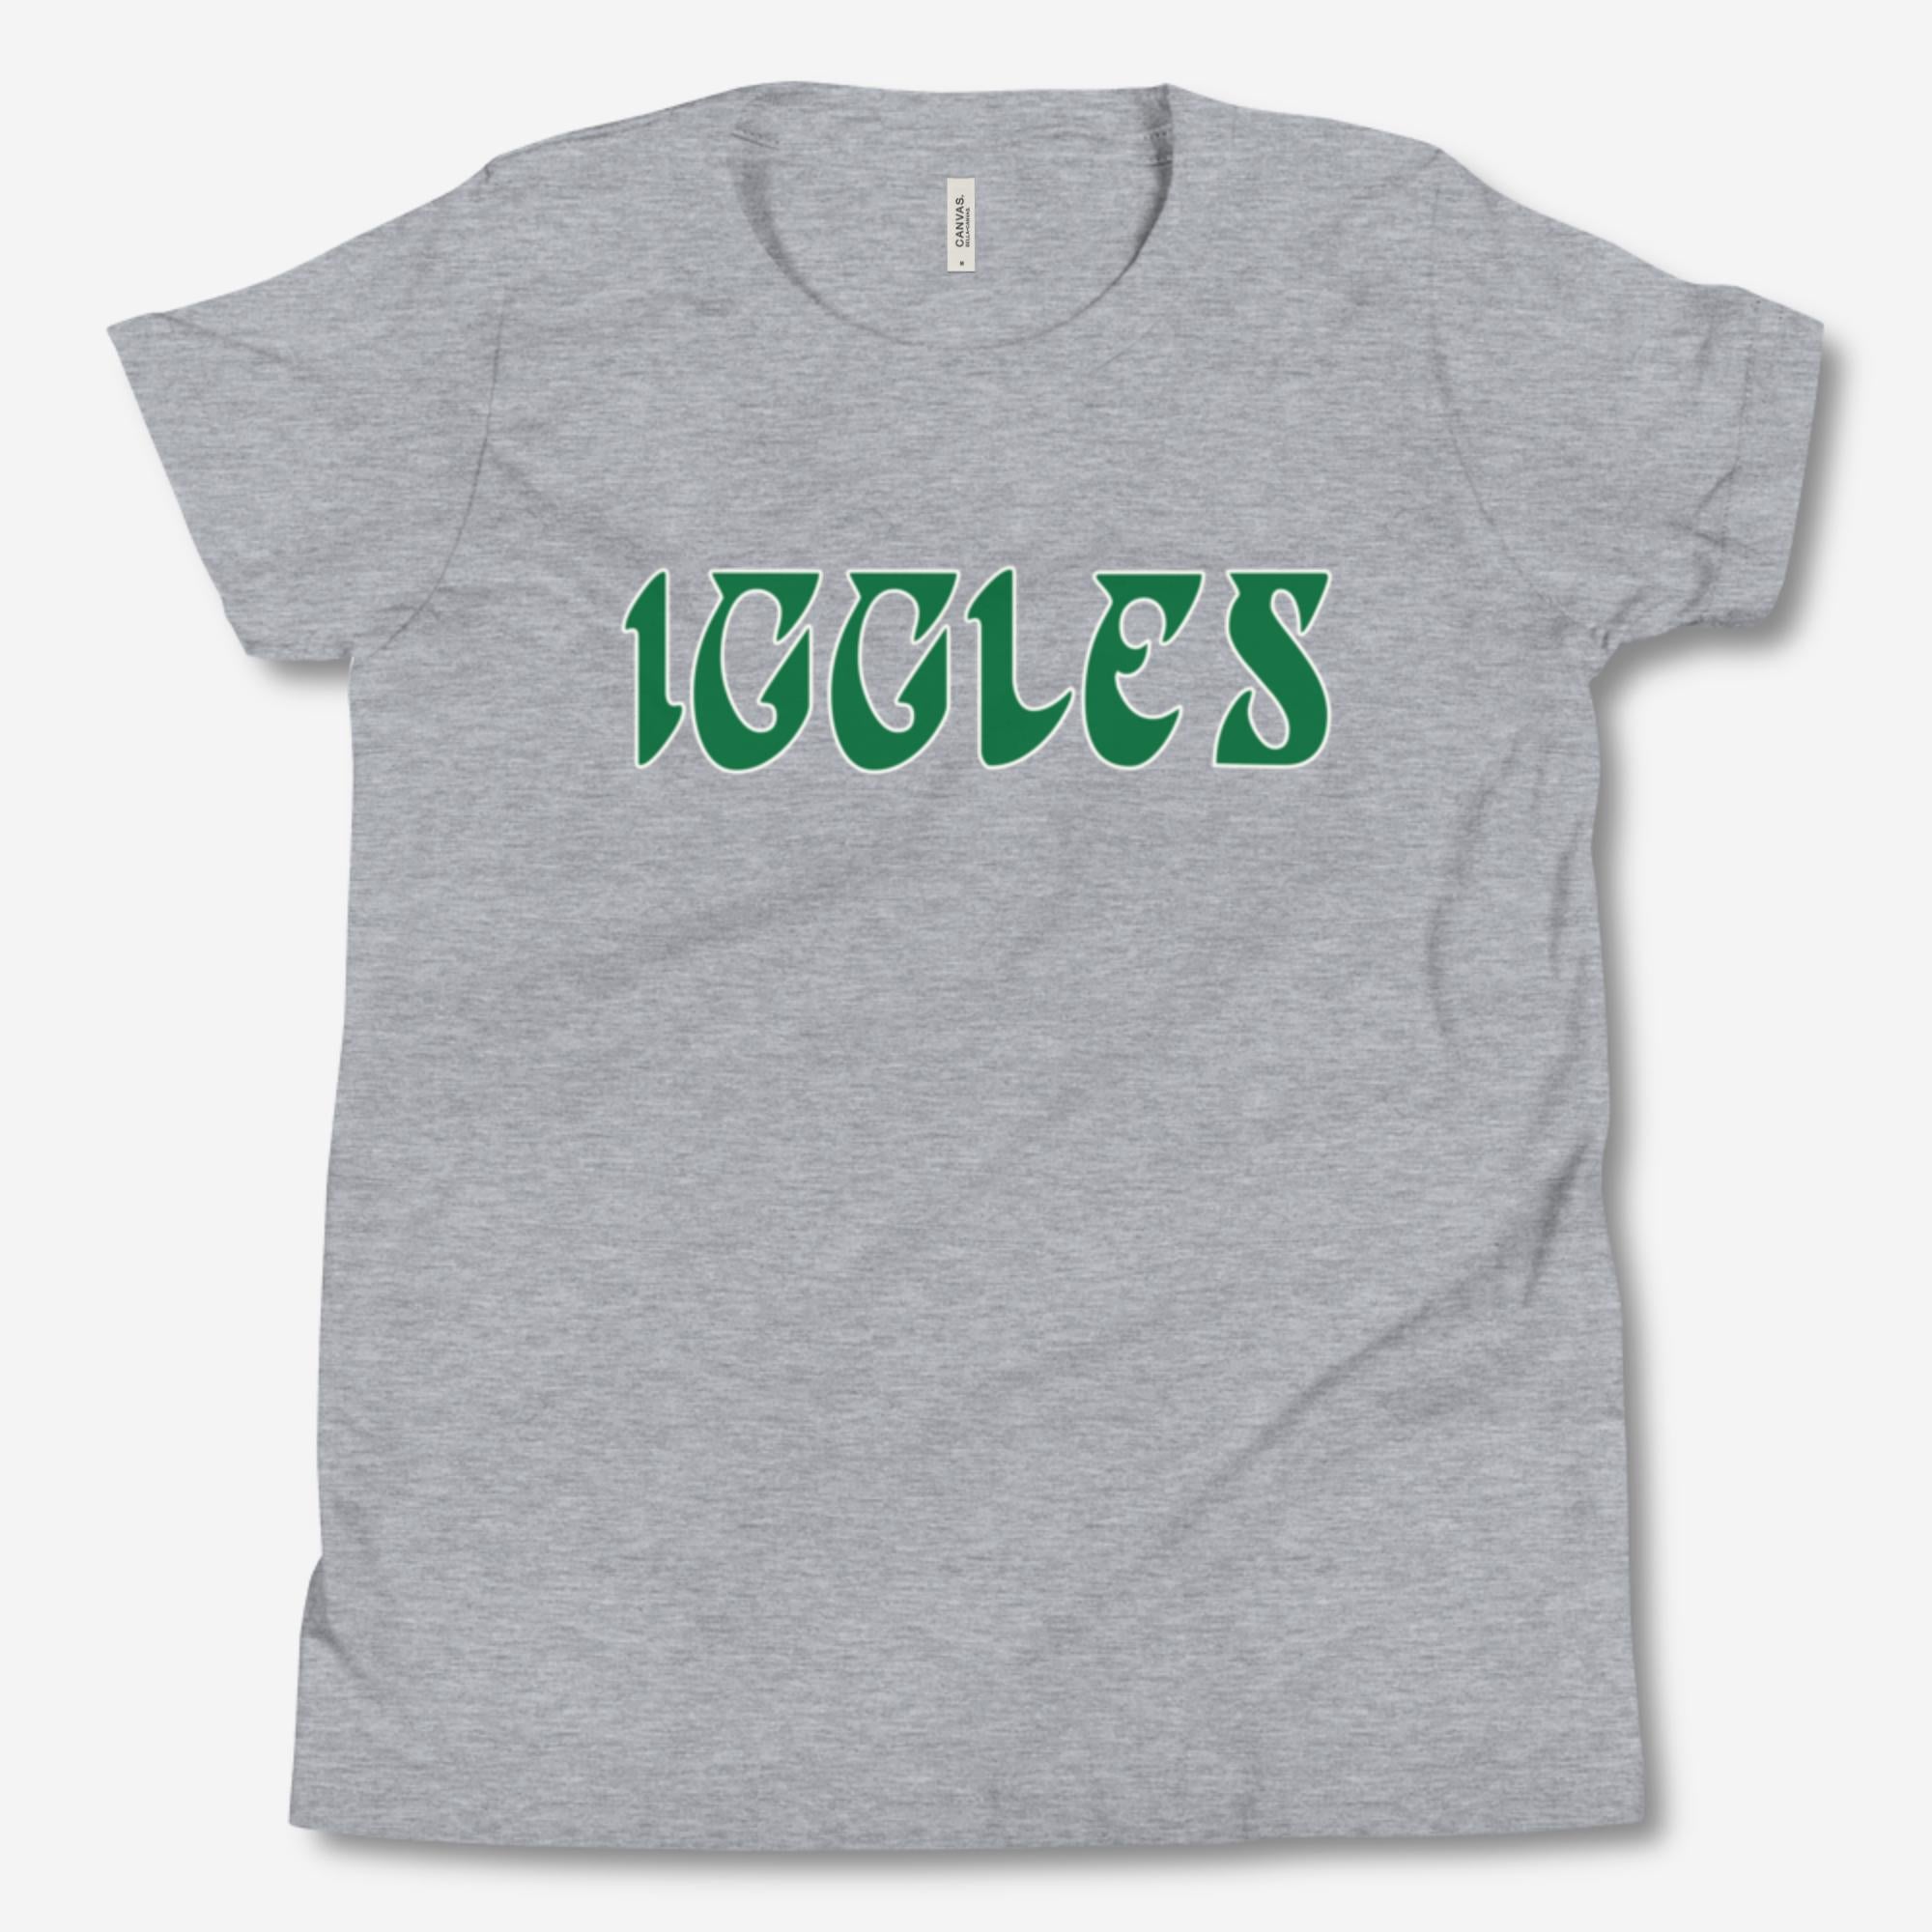 "Iggles" Youth Tee